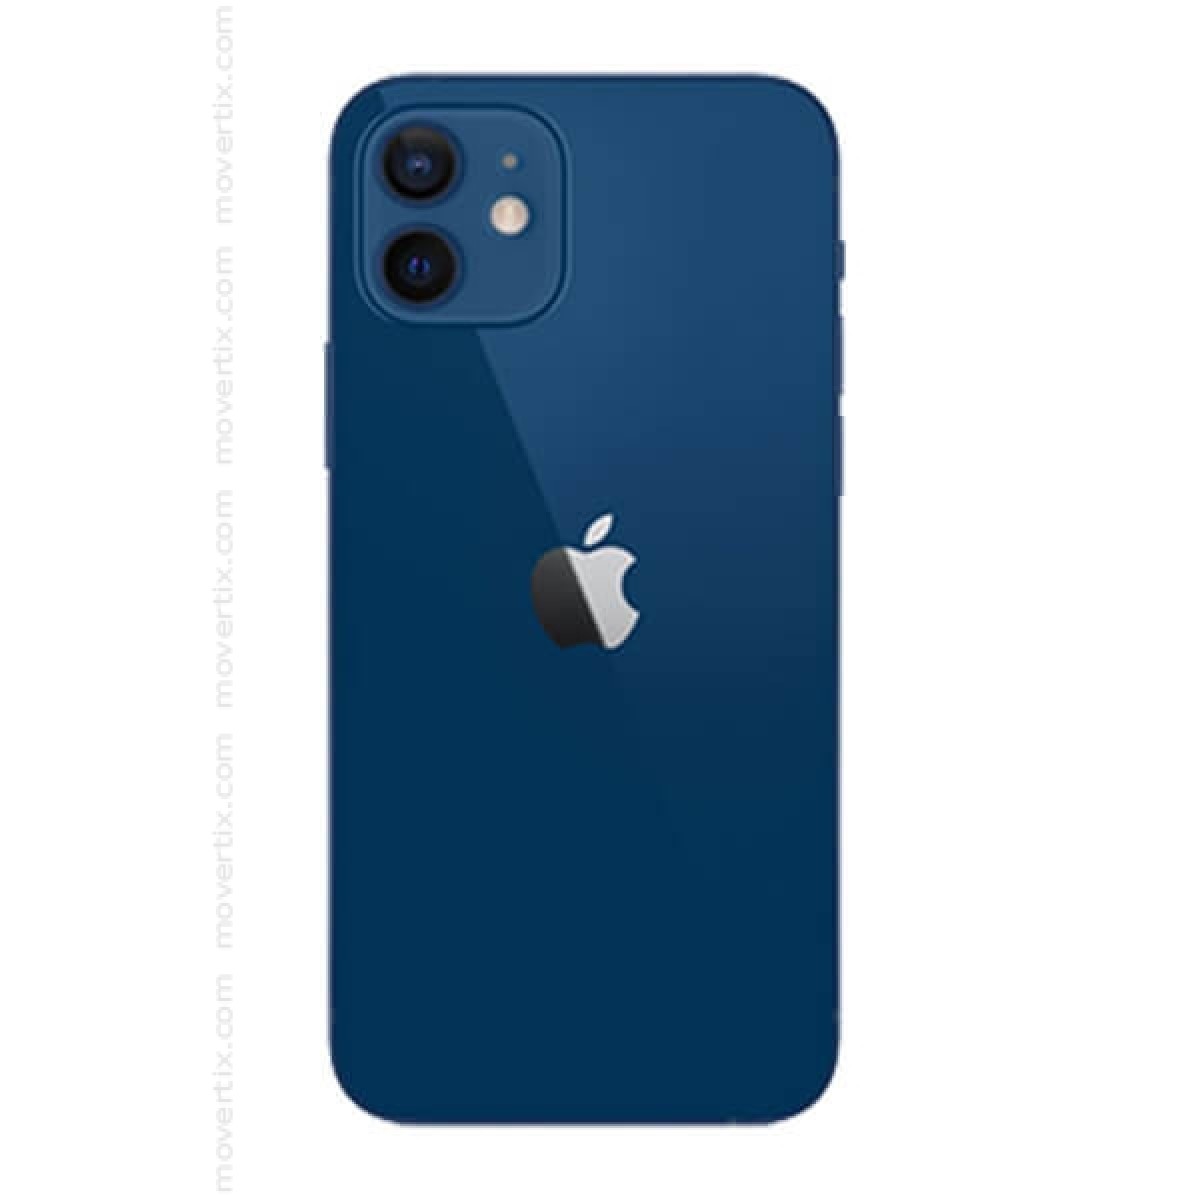 iPhone 12 in Blau mit 64GB (194252030530)